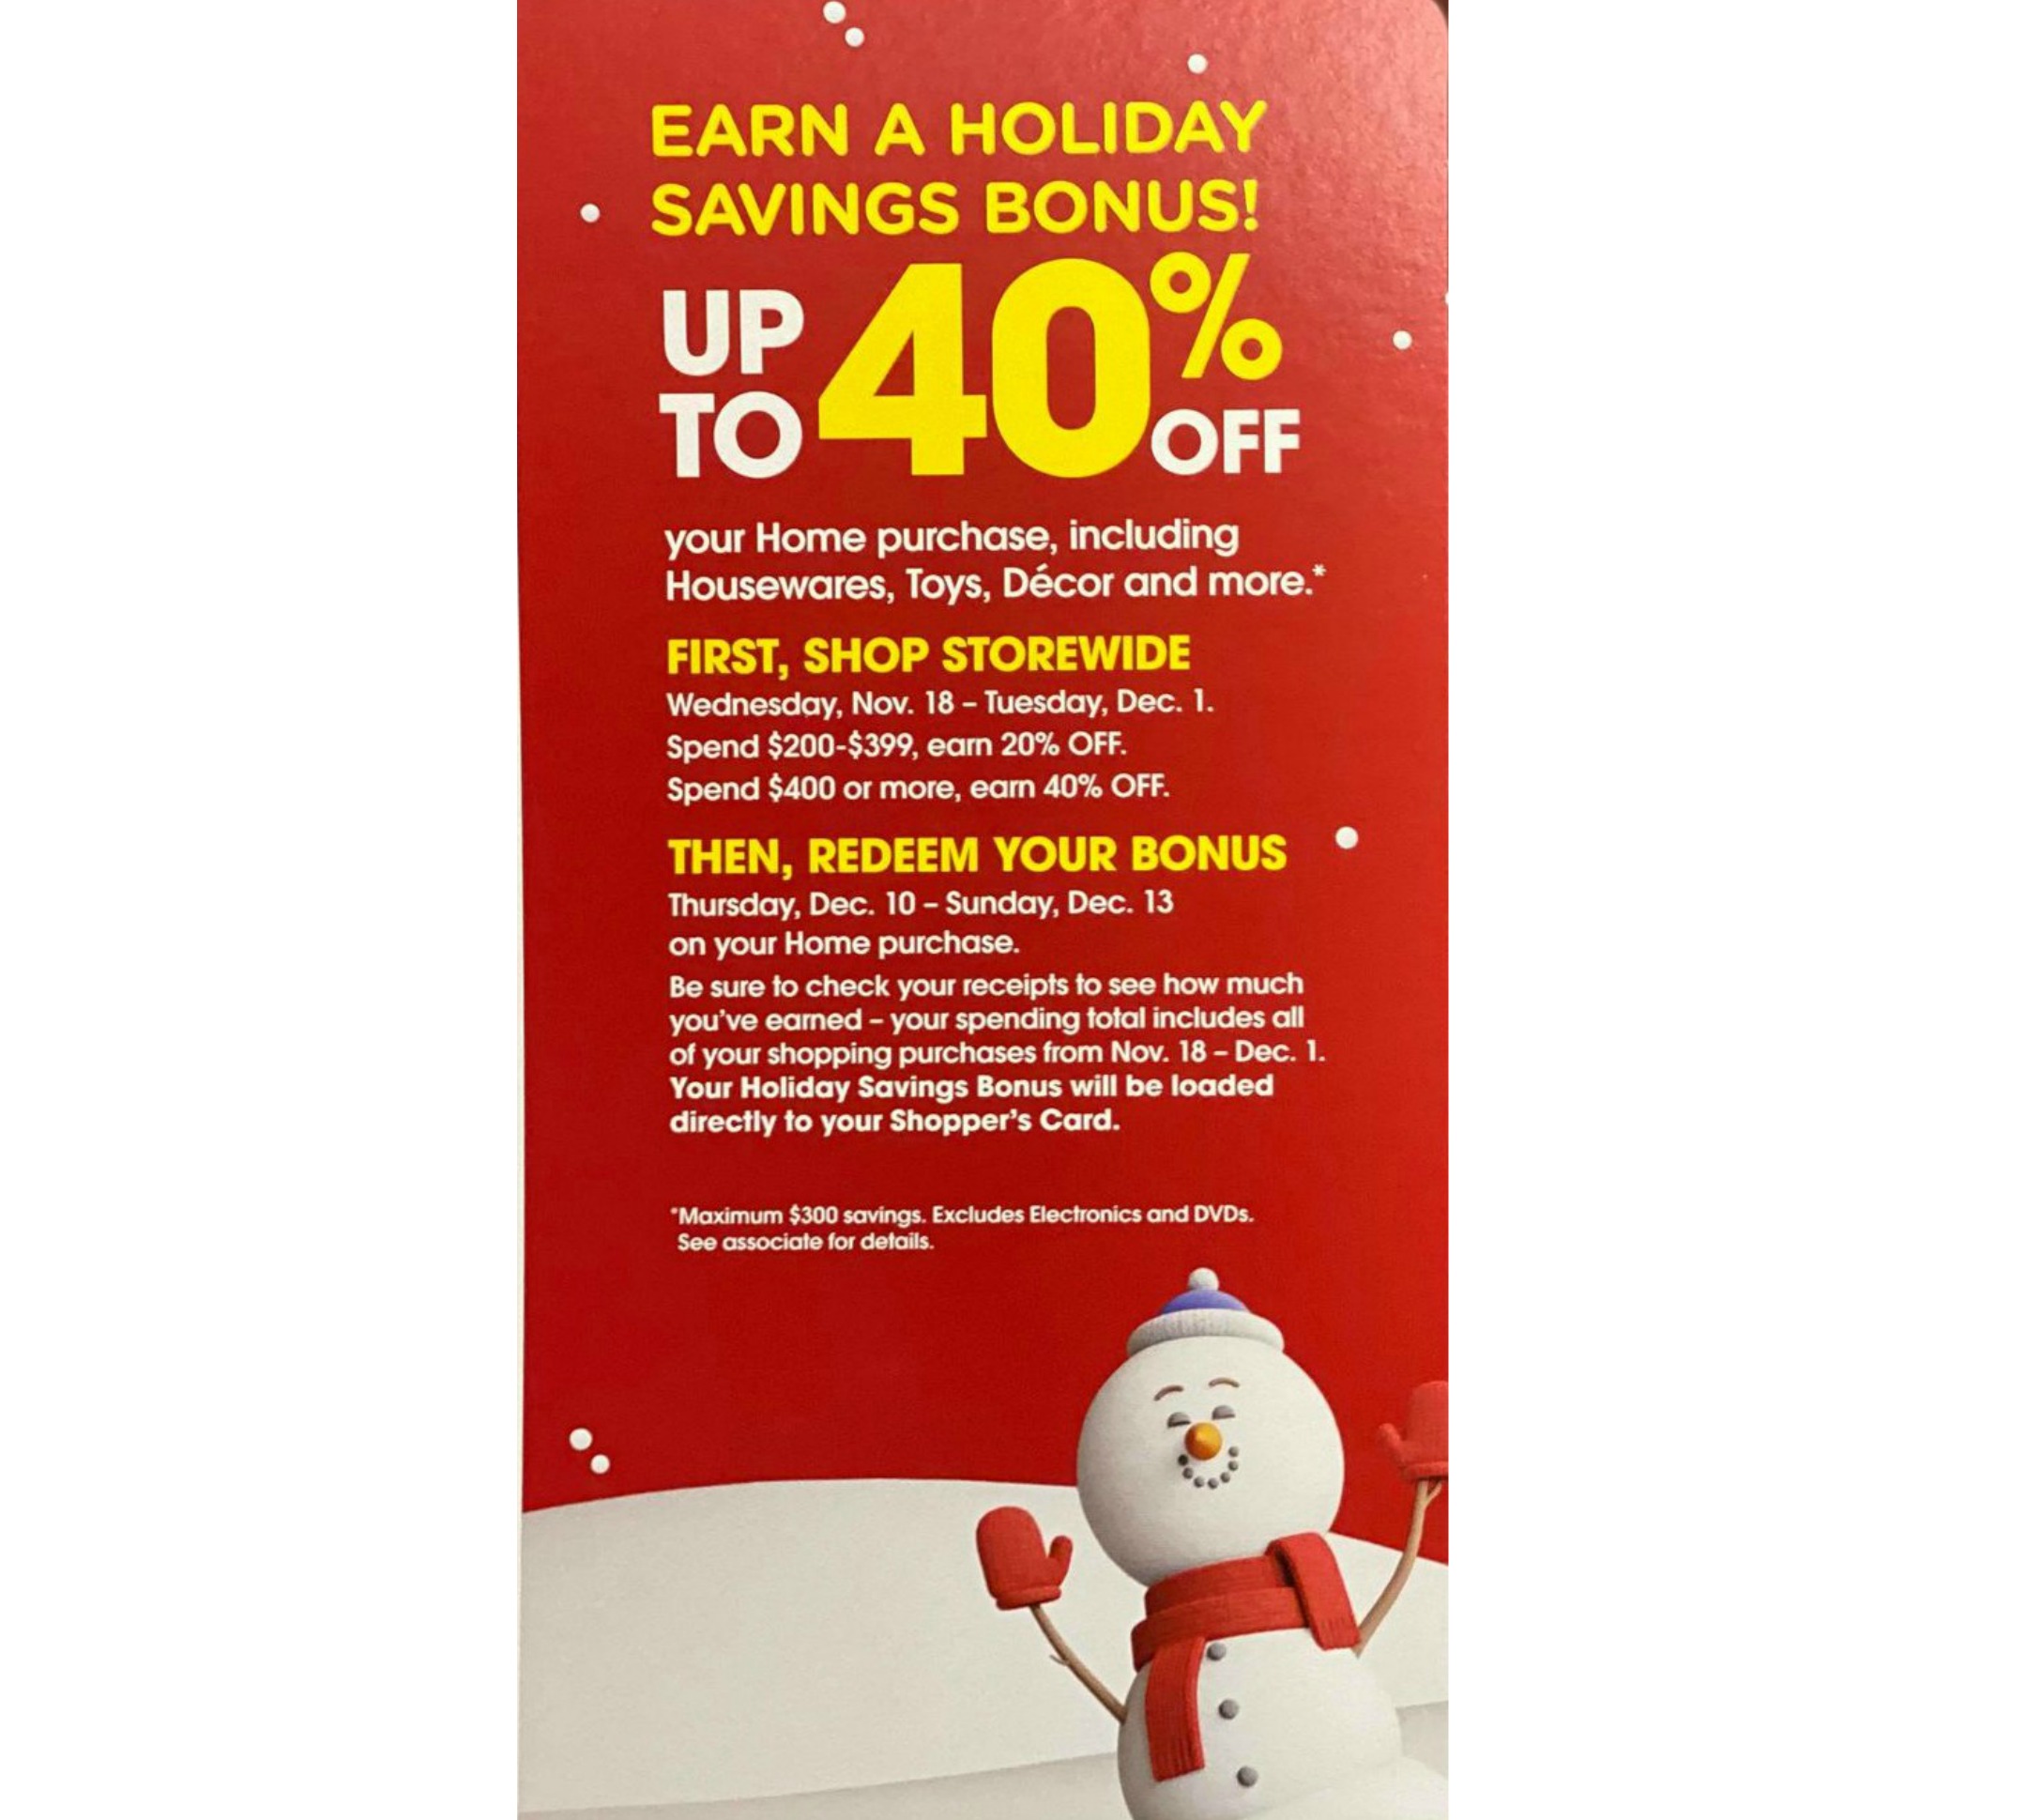 (Kroger Holiday Savings Bonus Starts TODAY!! Earn Up to 40 off Apparel